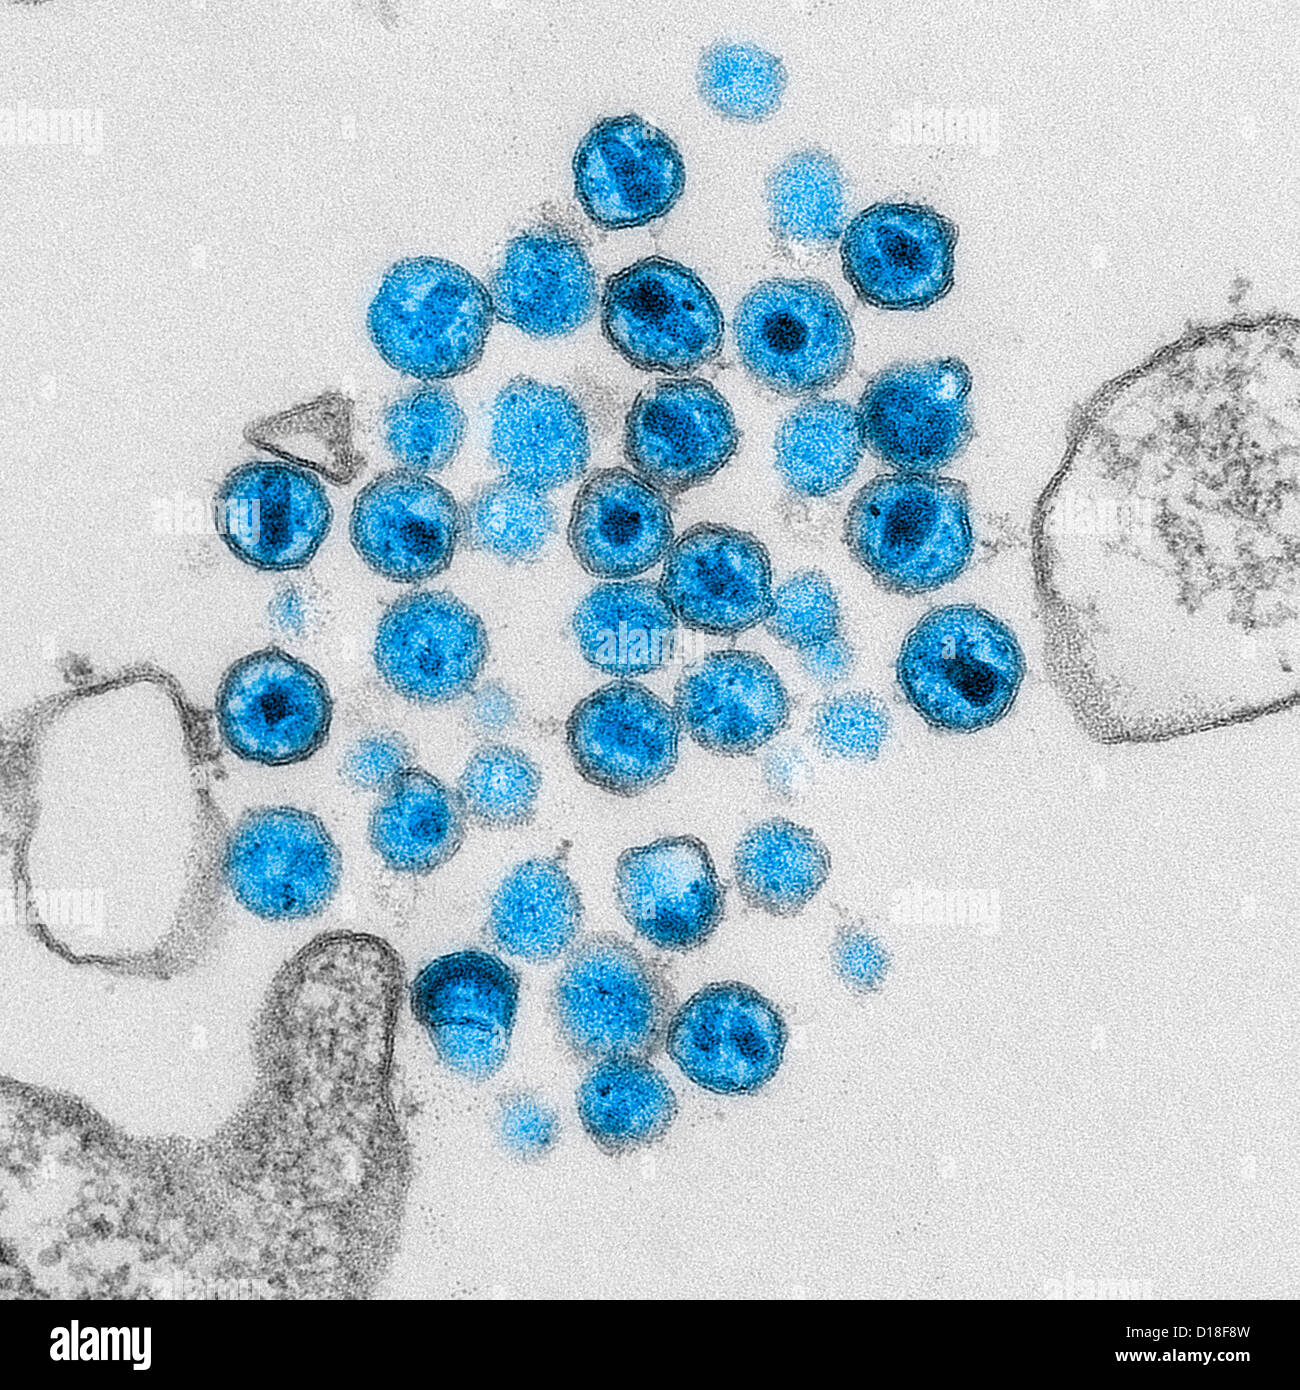 Electron micrograph of HIV virus Stock Photo